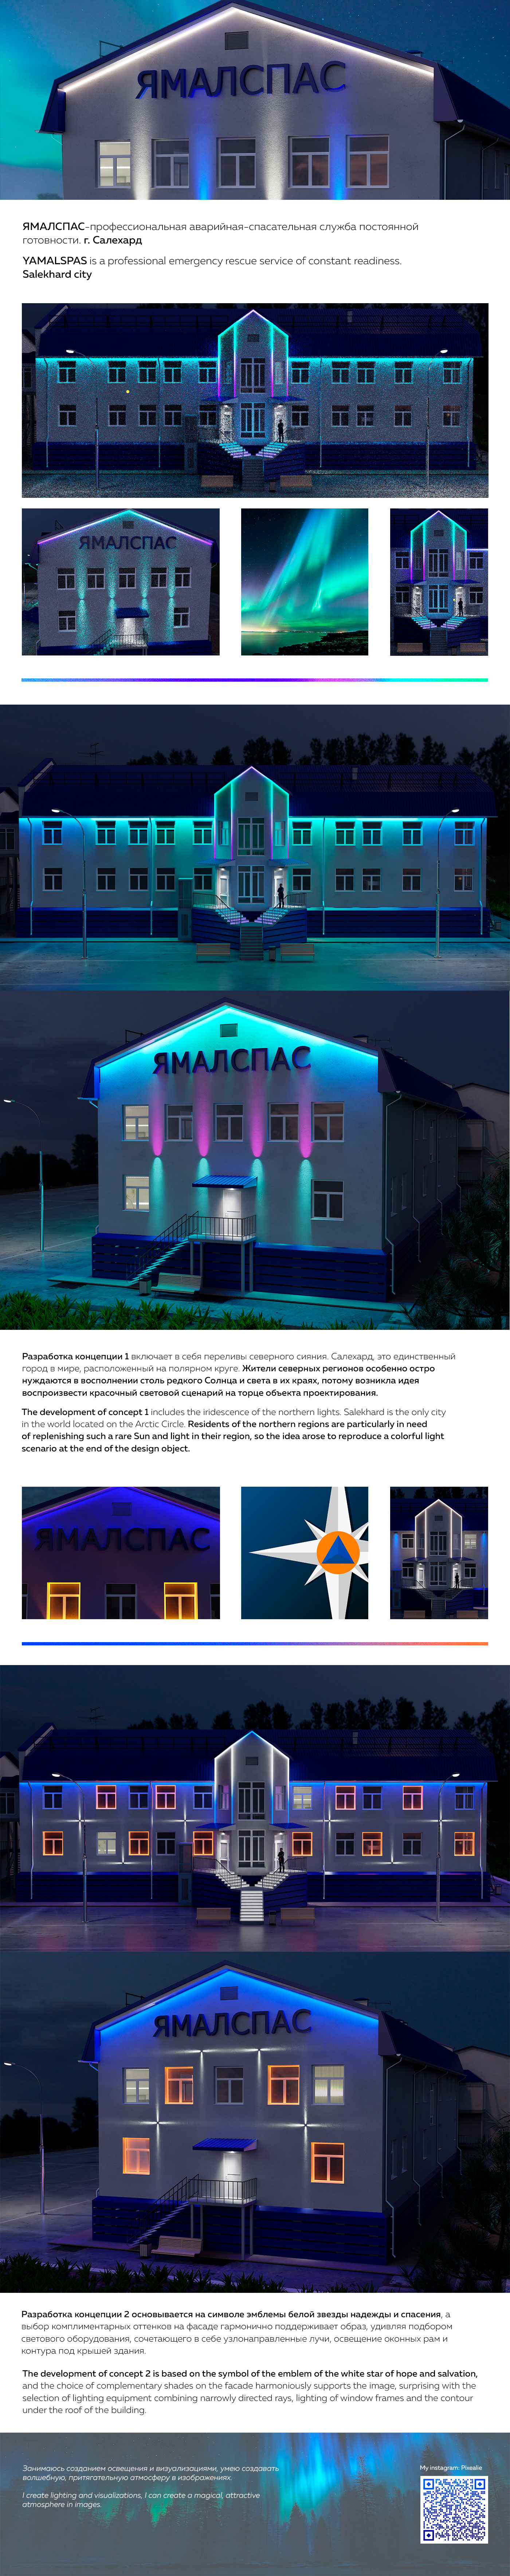 house architecture 3D Render social light area facade visualization wonderful